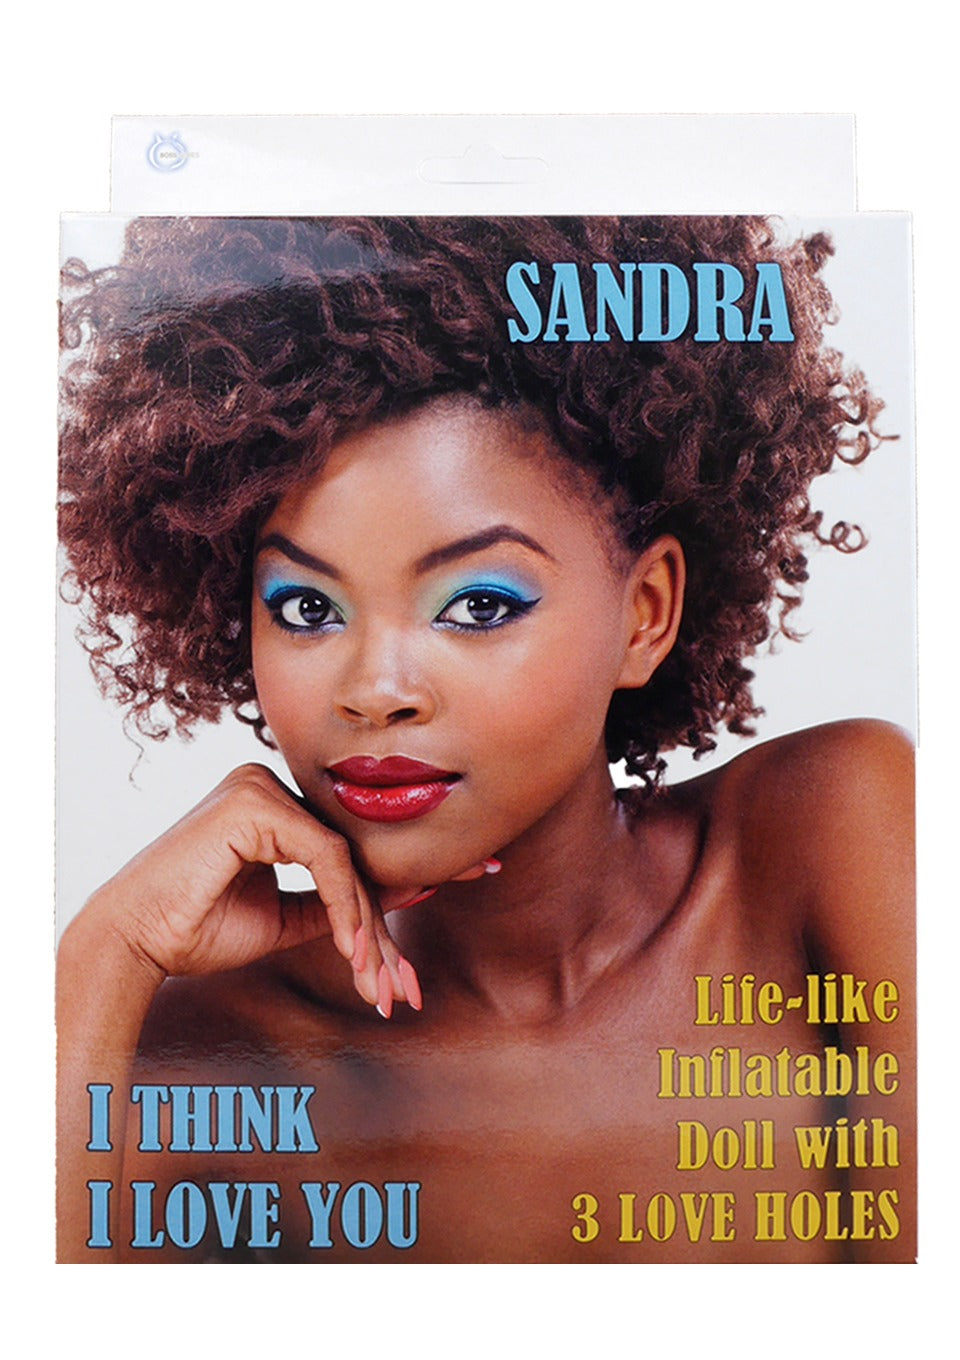 Bossoftoys Sandra Blow Up love Doll - Black Woman - 59-00009